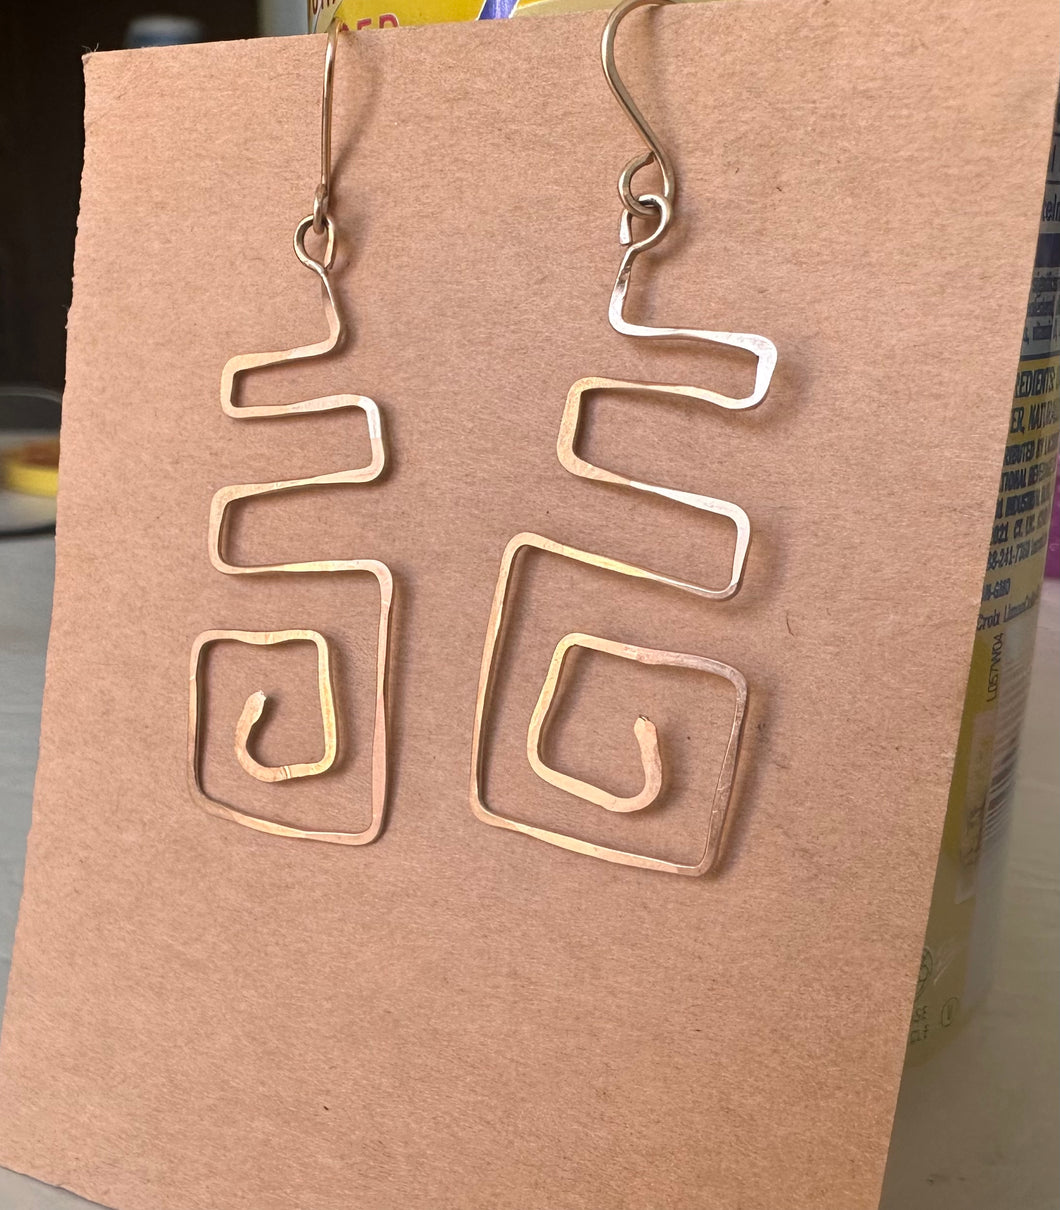 Inca inspired geometric earrings